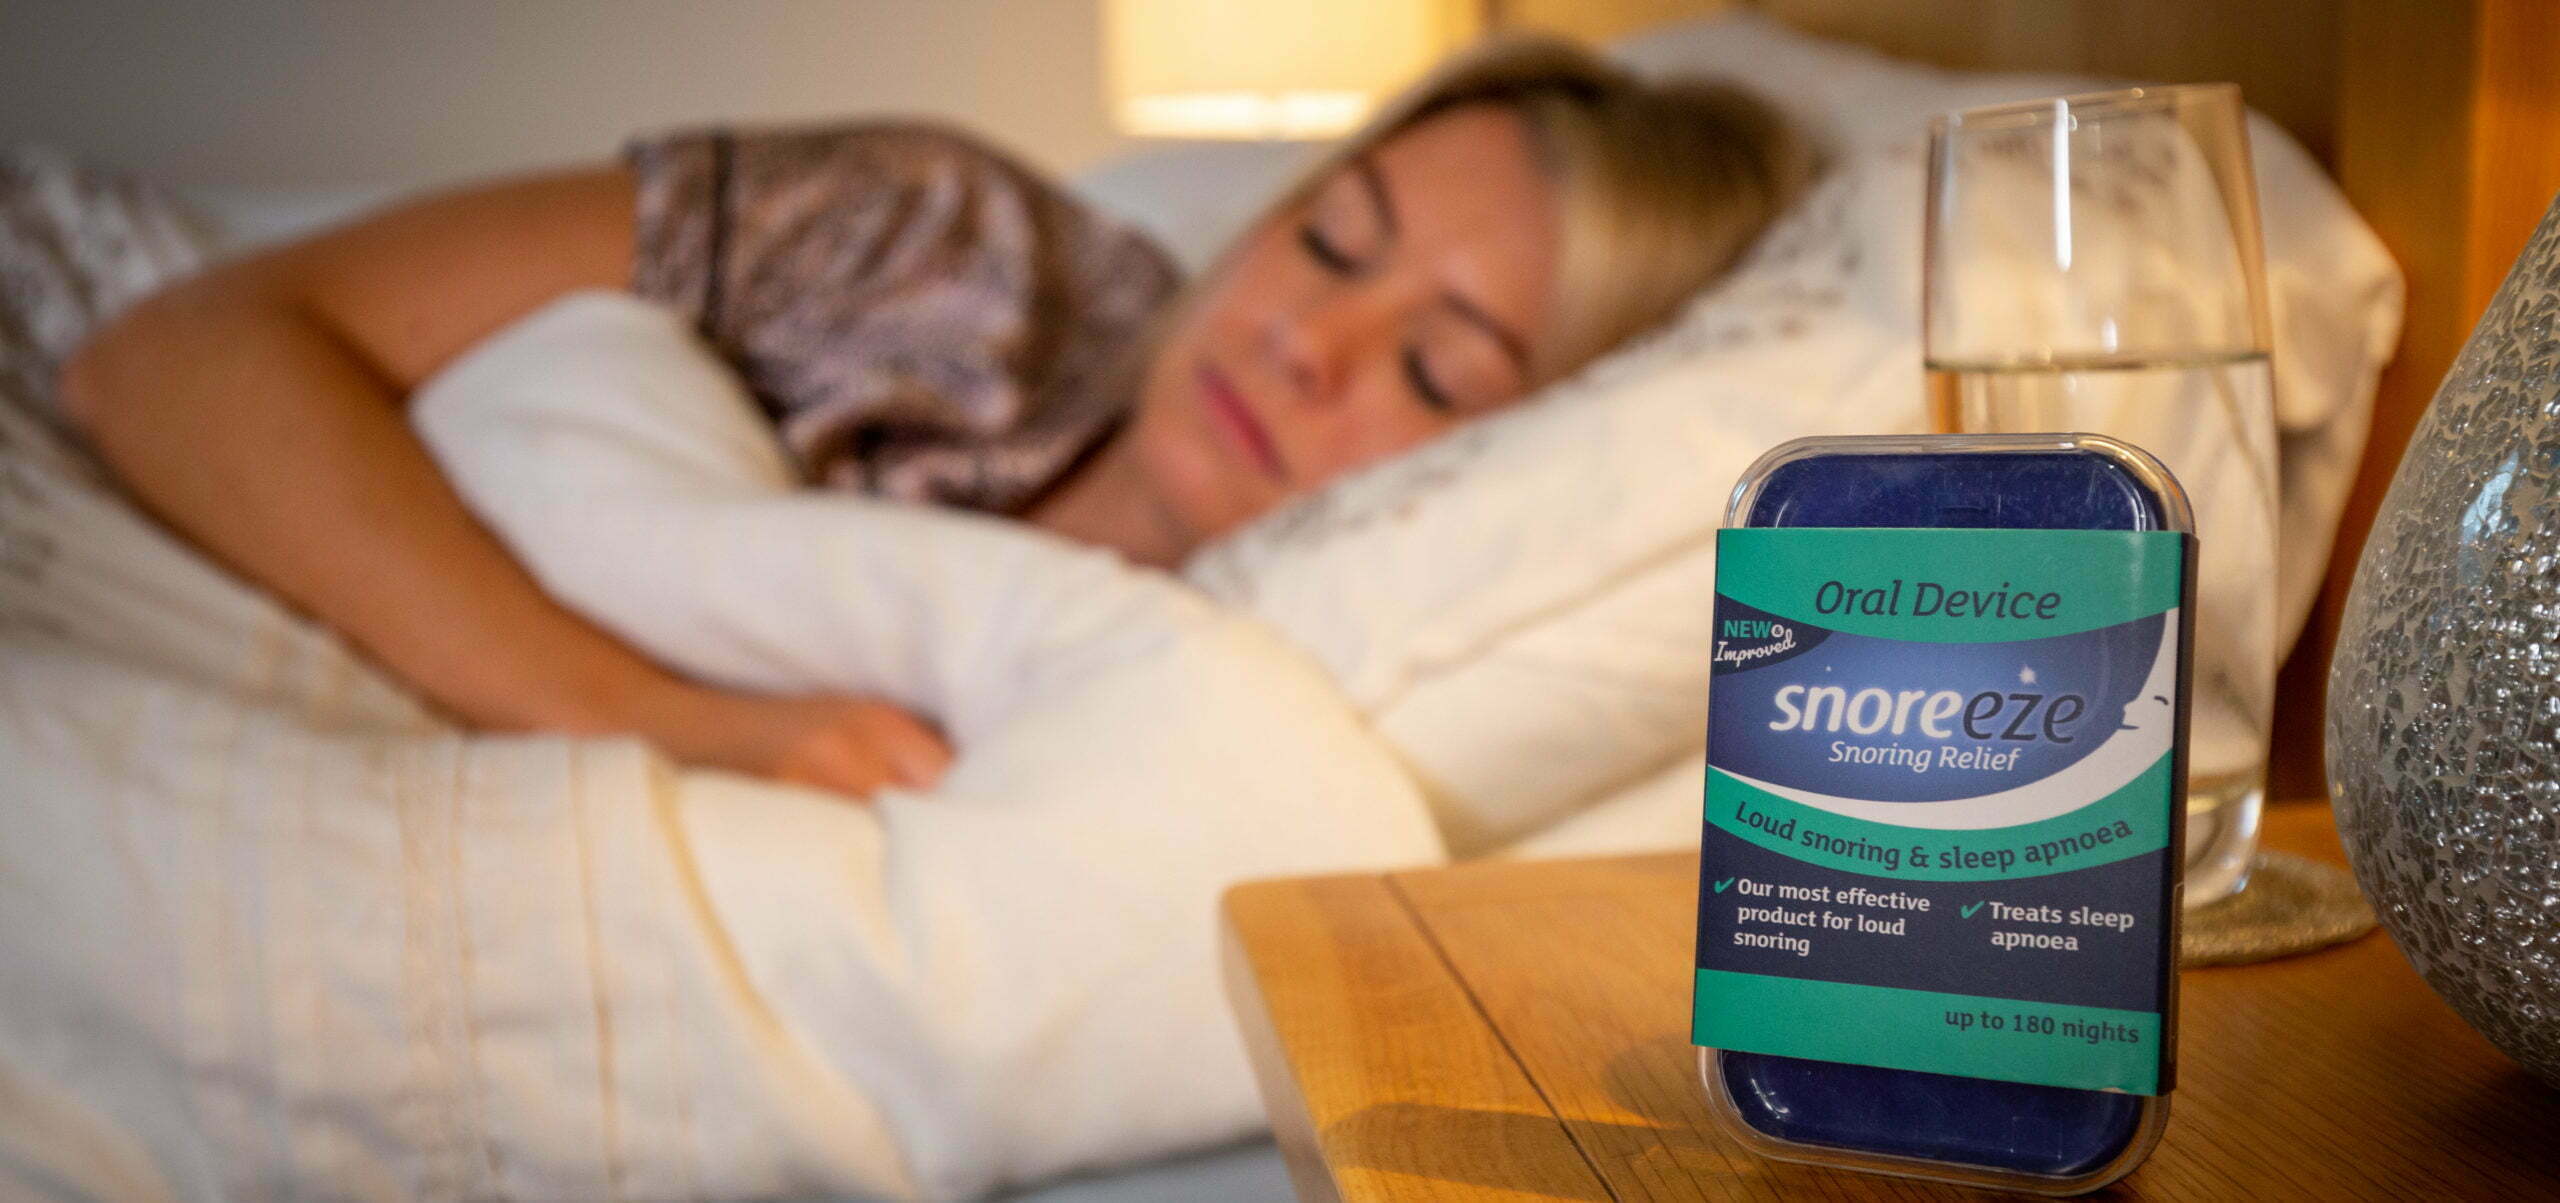 Mandibular advancement device to treat snoring on bedside table